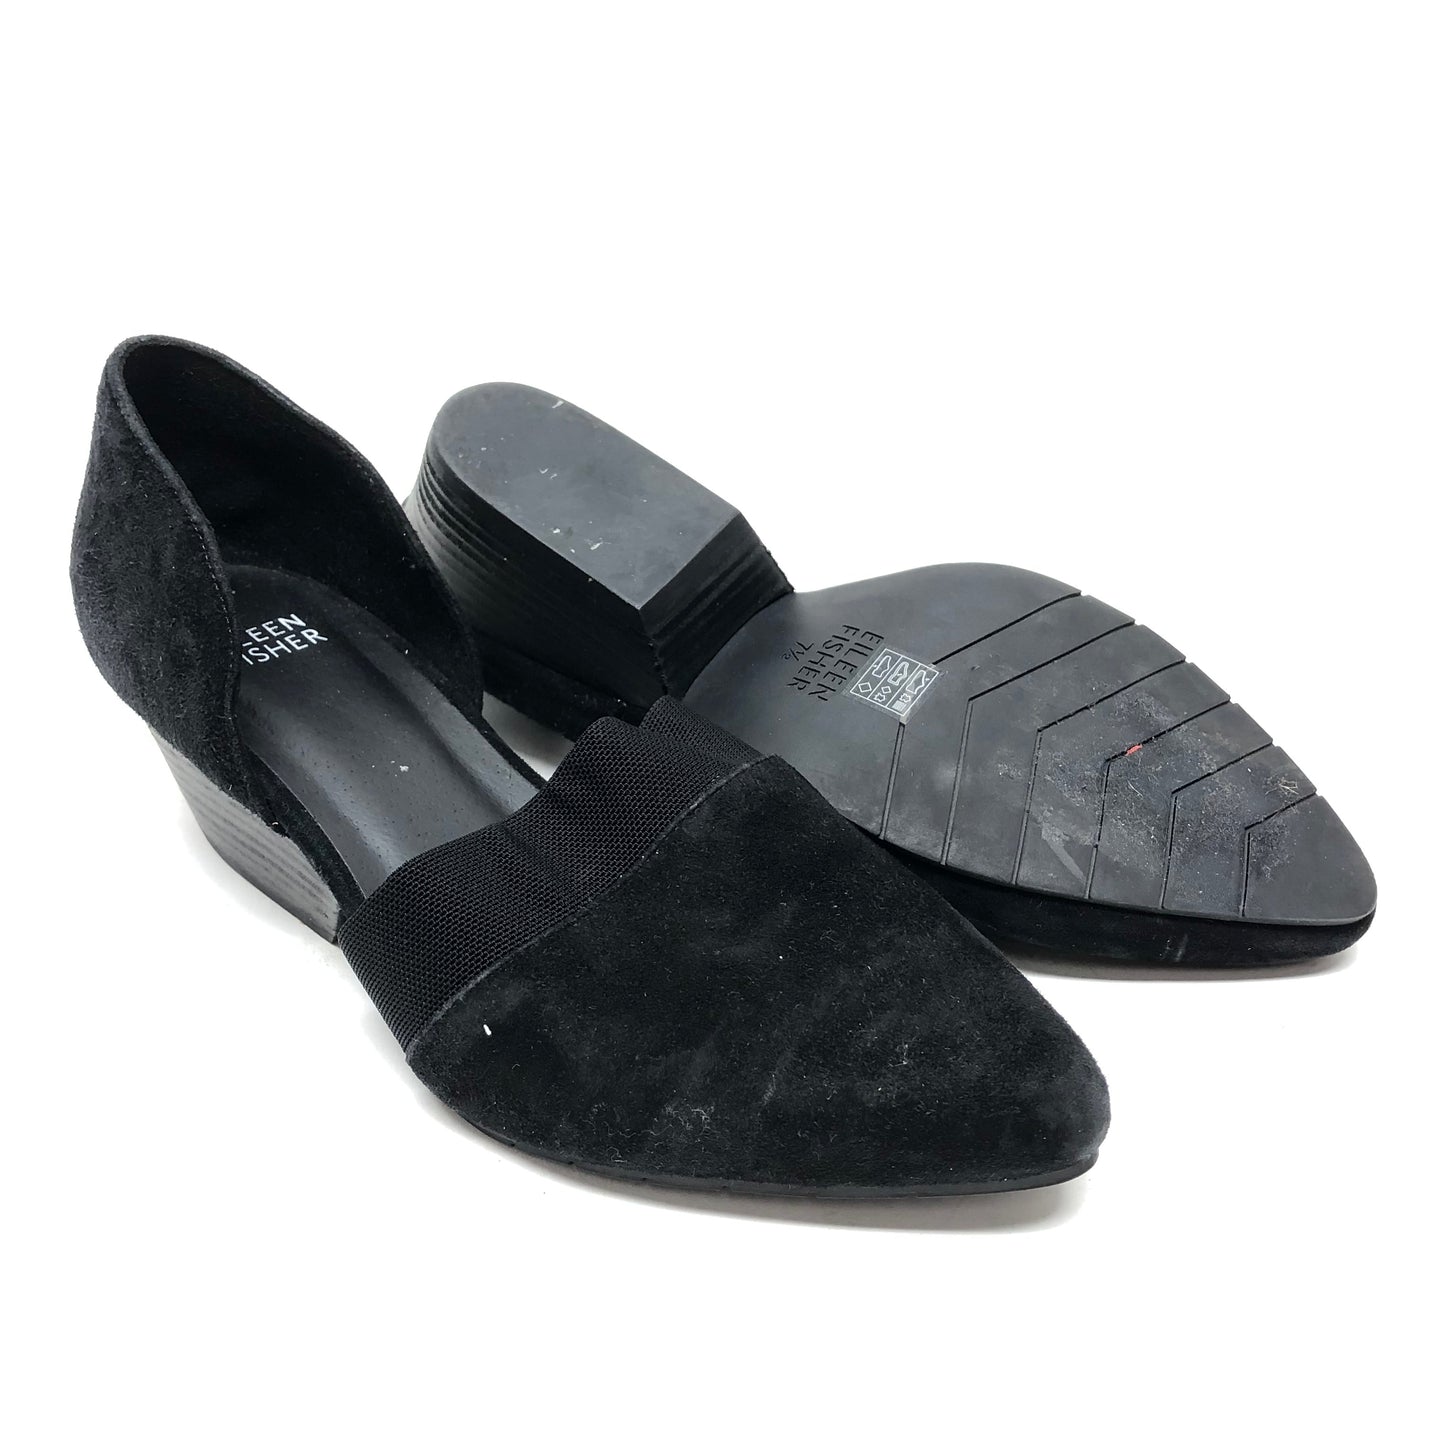 Black Shoes Heels Block Eileen Fisher, Size 7.5